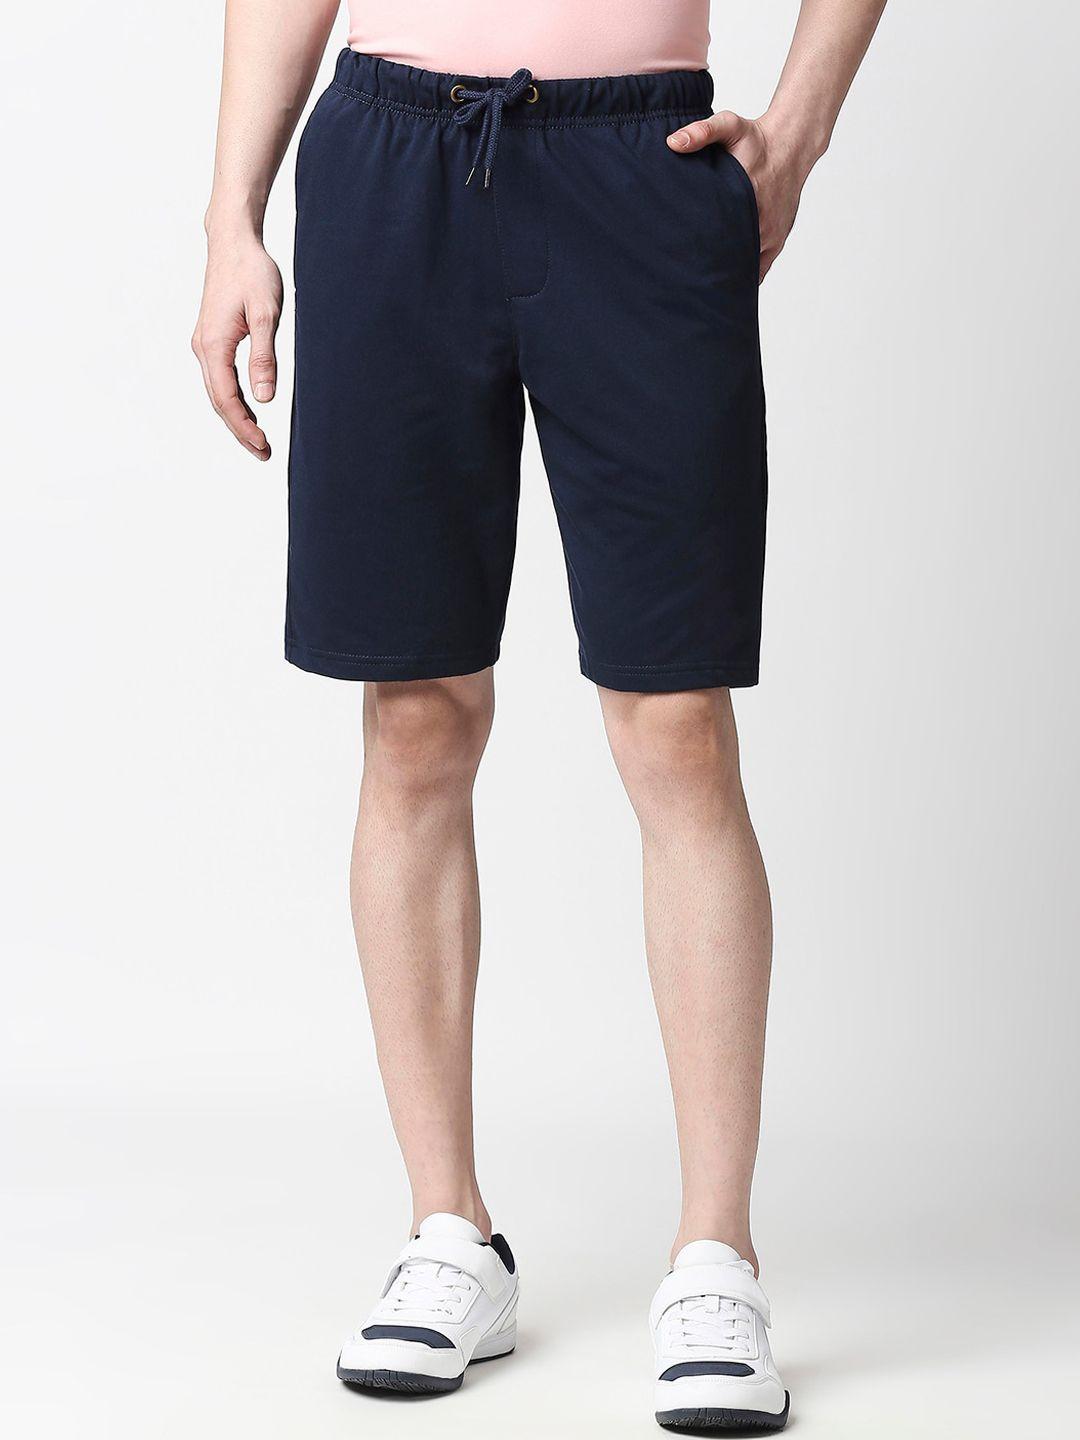 bewakoof-men-navy-blue-mid-rise-regular-shorts